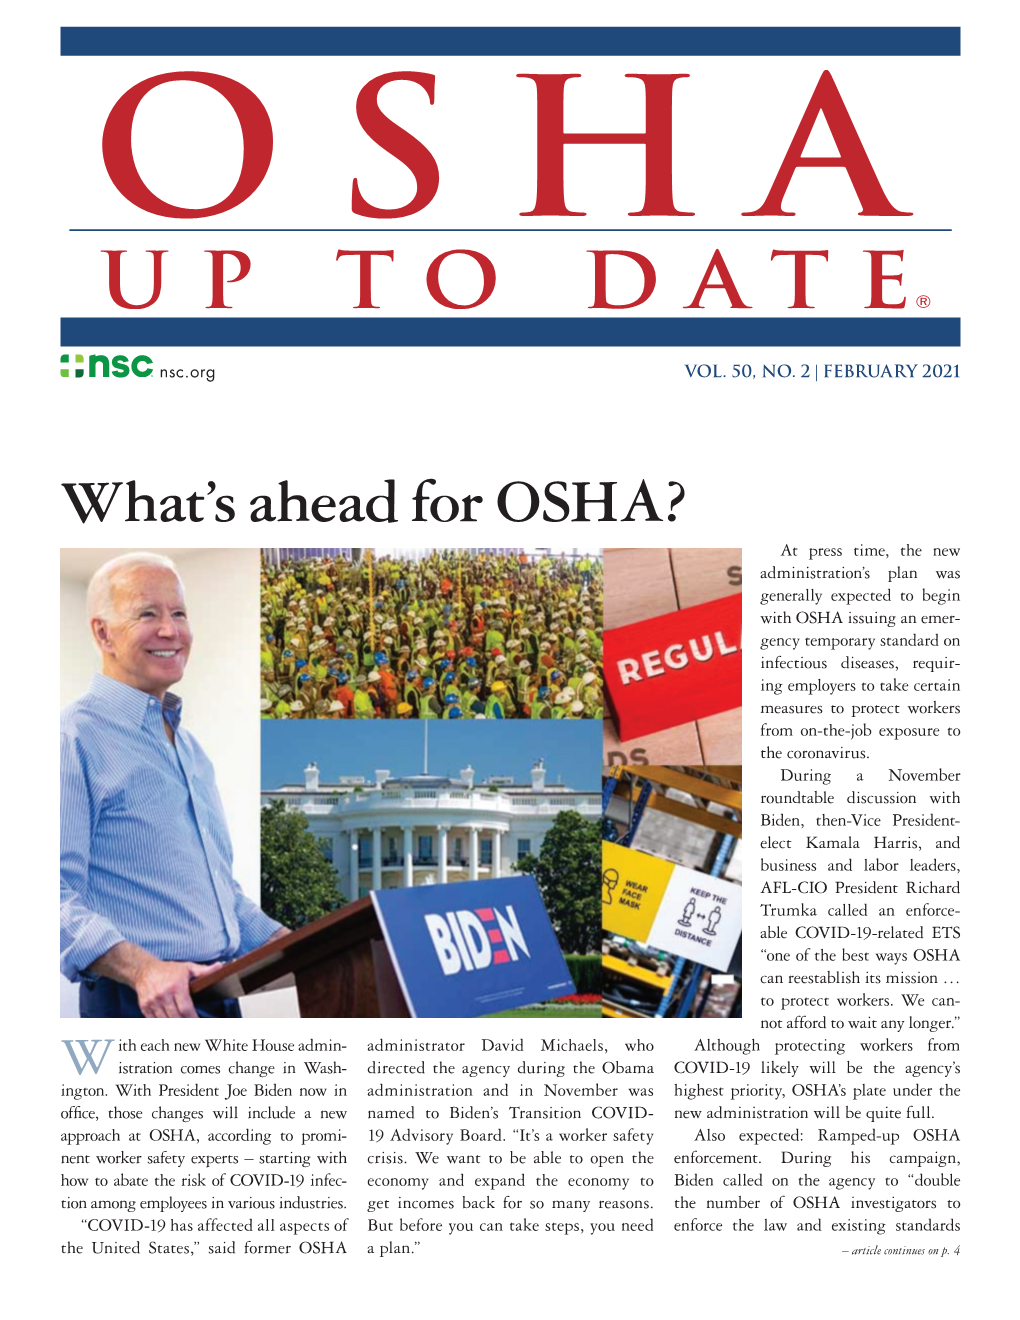 What's Ahead for OSHA?